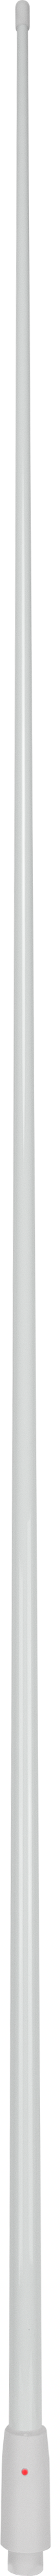 2400mm-27mhz-detachable-antenna-whip---white